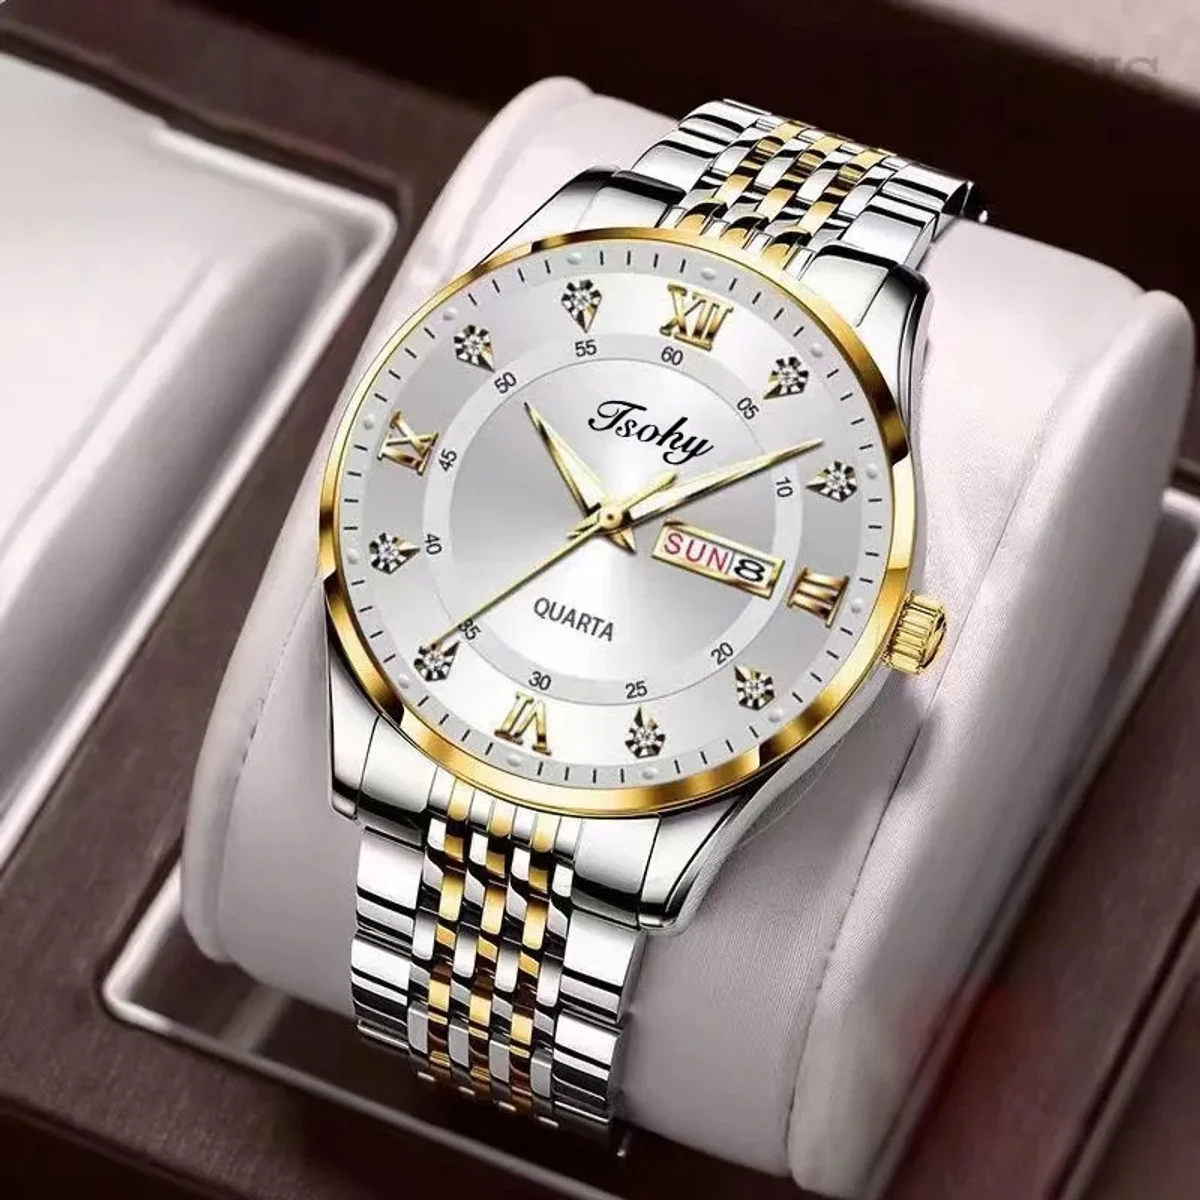 Luxury ISOHY authentic men's watch waterproof night light dual calendar watch men's quartz watch ceiling glass- Silver & Golden